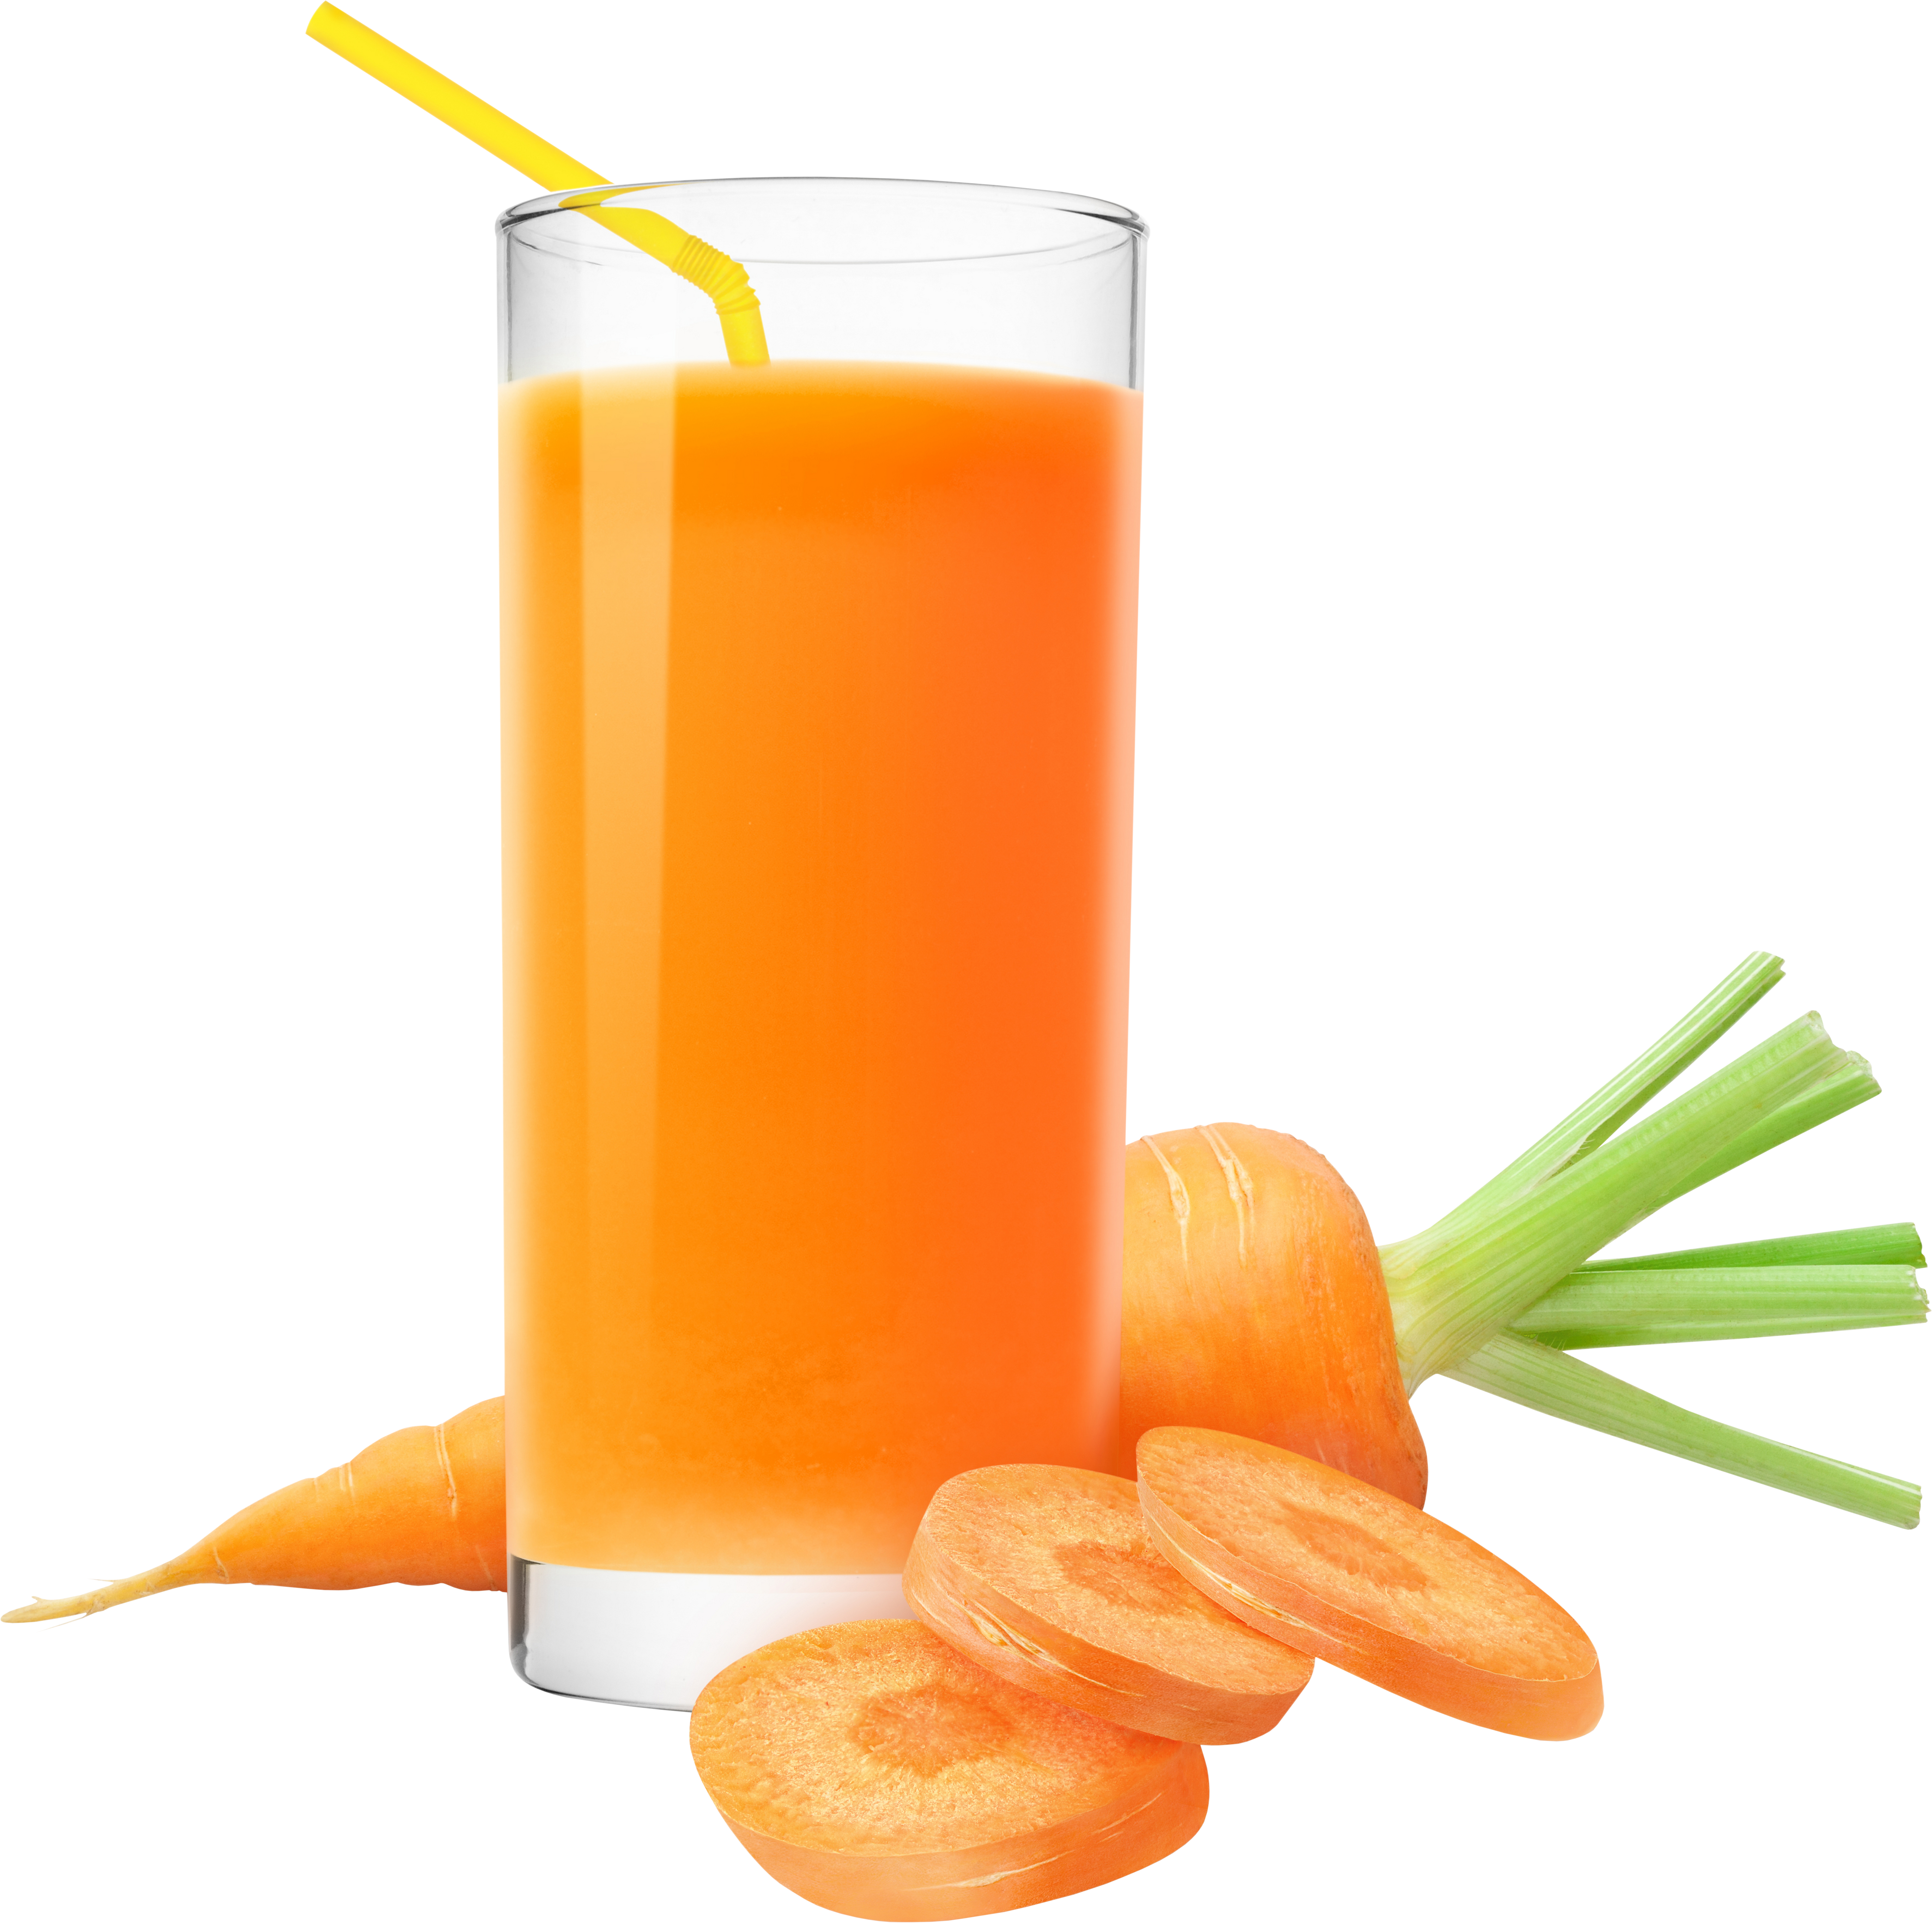 Succo di carota